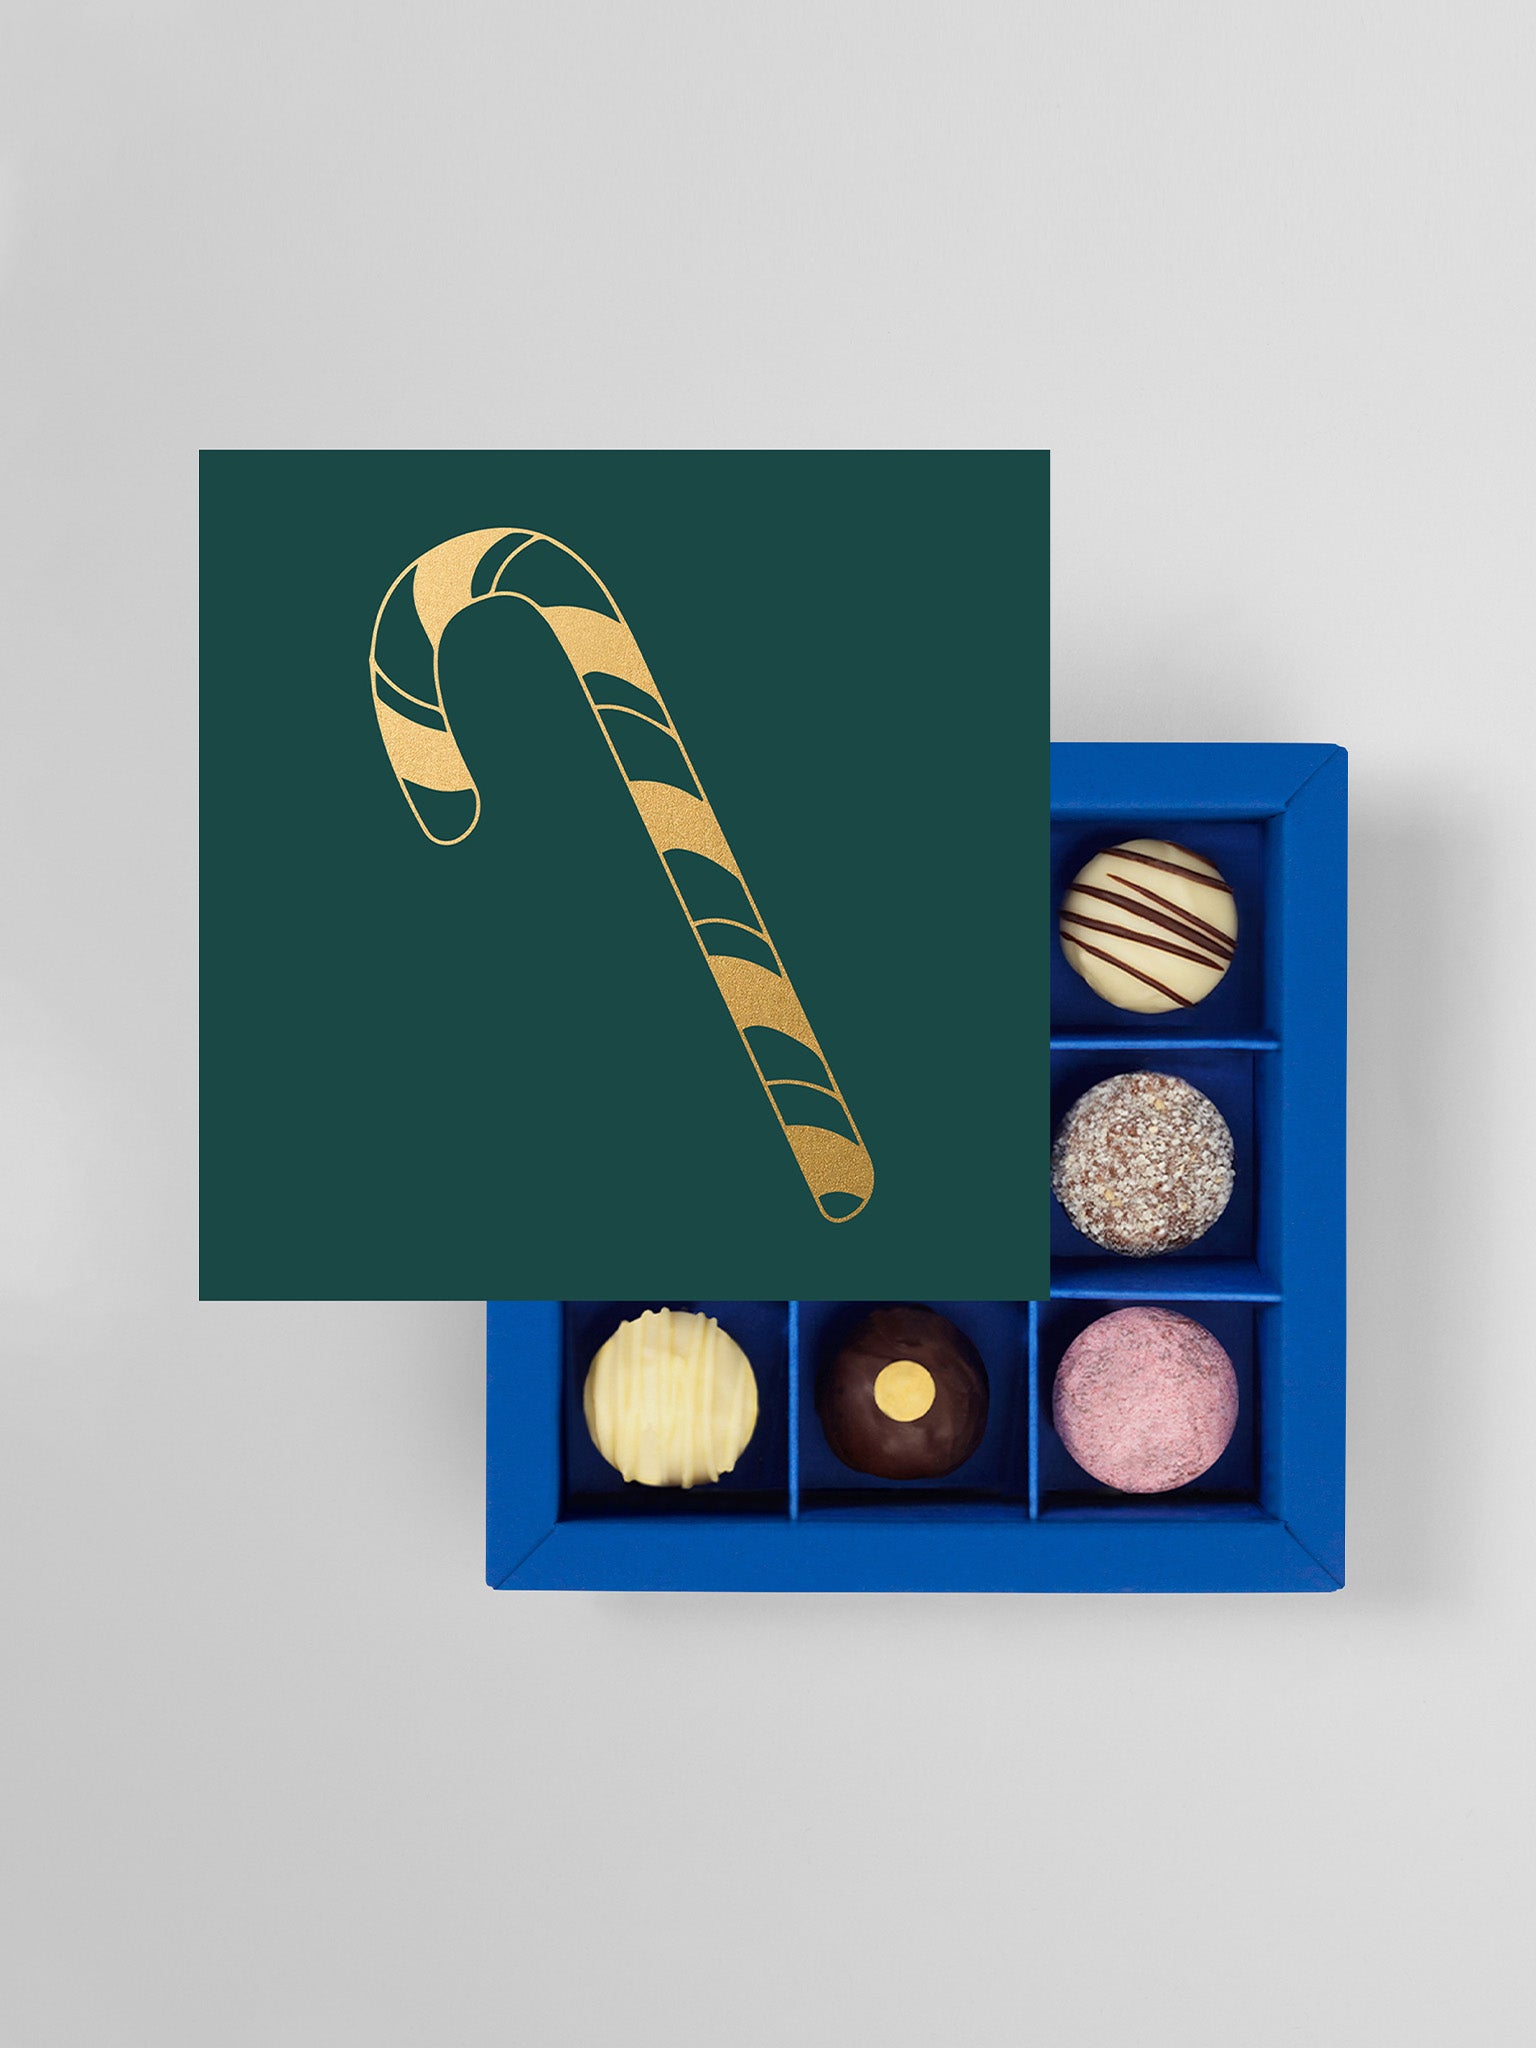 Medium box with 9 chocolates - candy cane